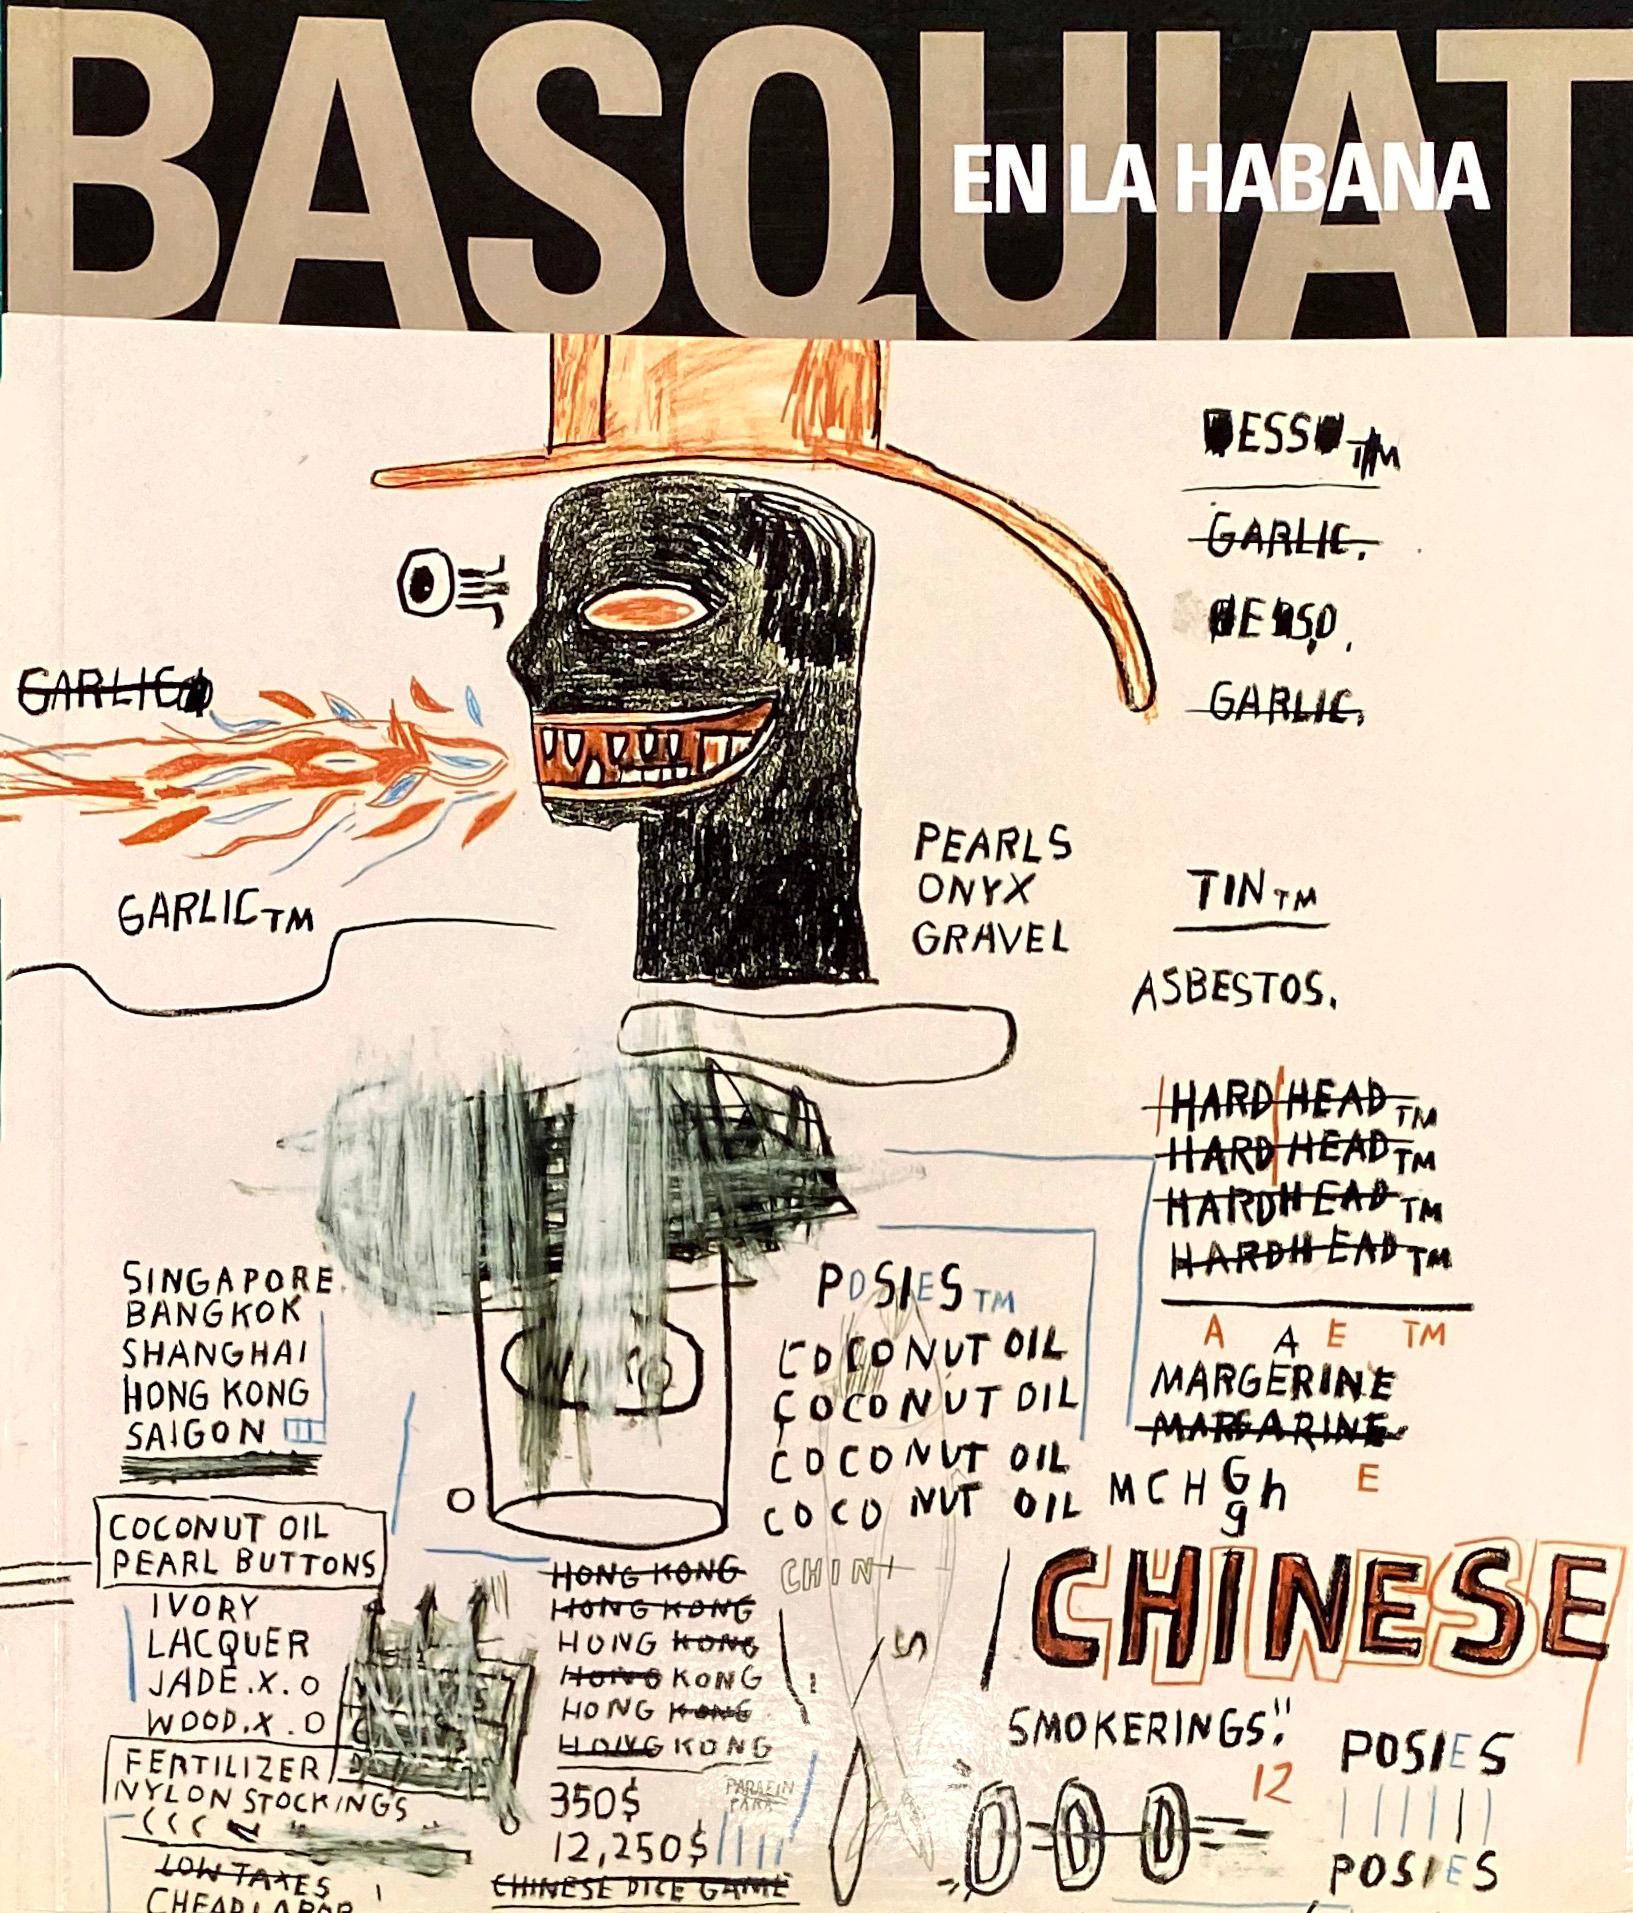 Basquiat En La Habana catalog (Basquiat Navarra catalog Havana) - Art by after Jean-Michel Basquiat